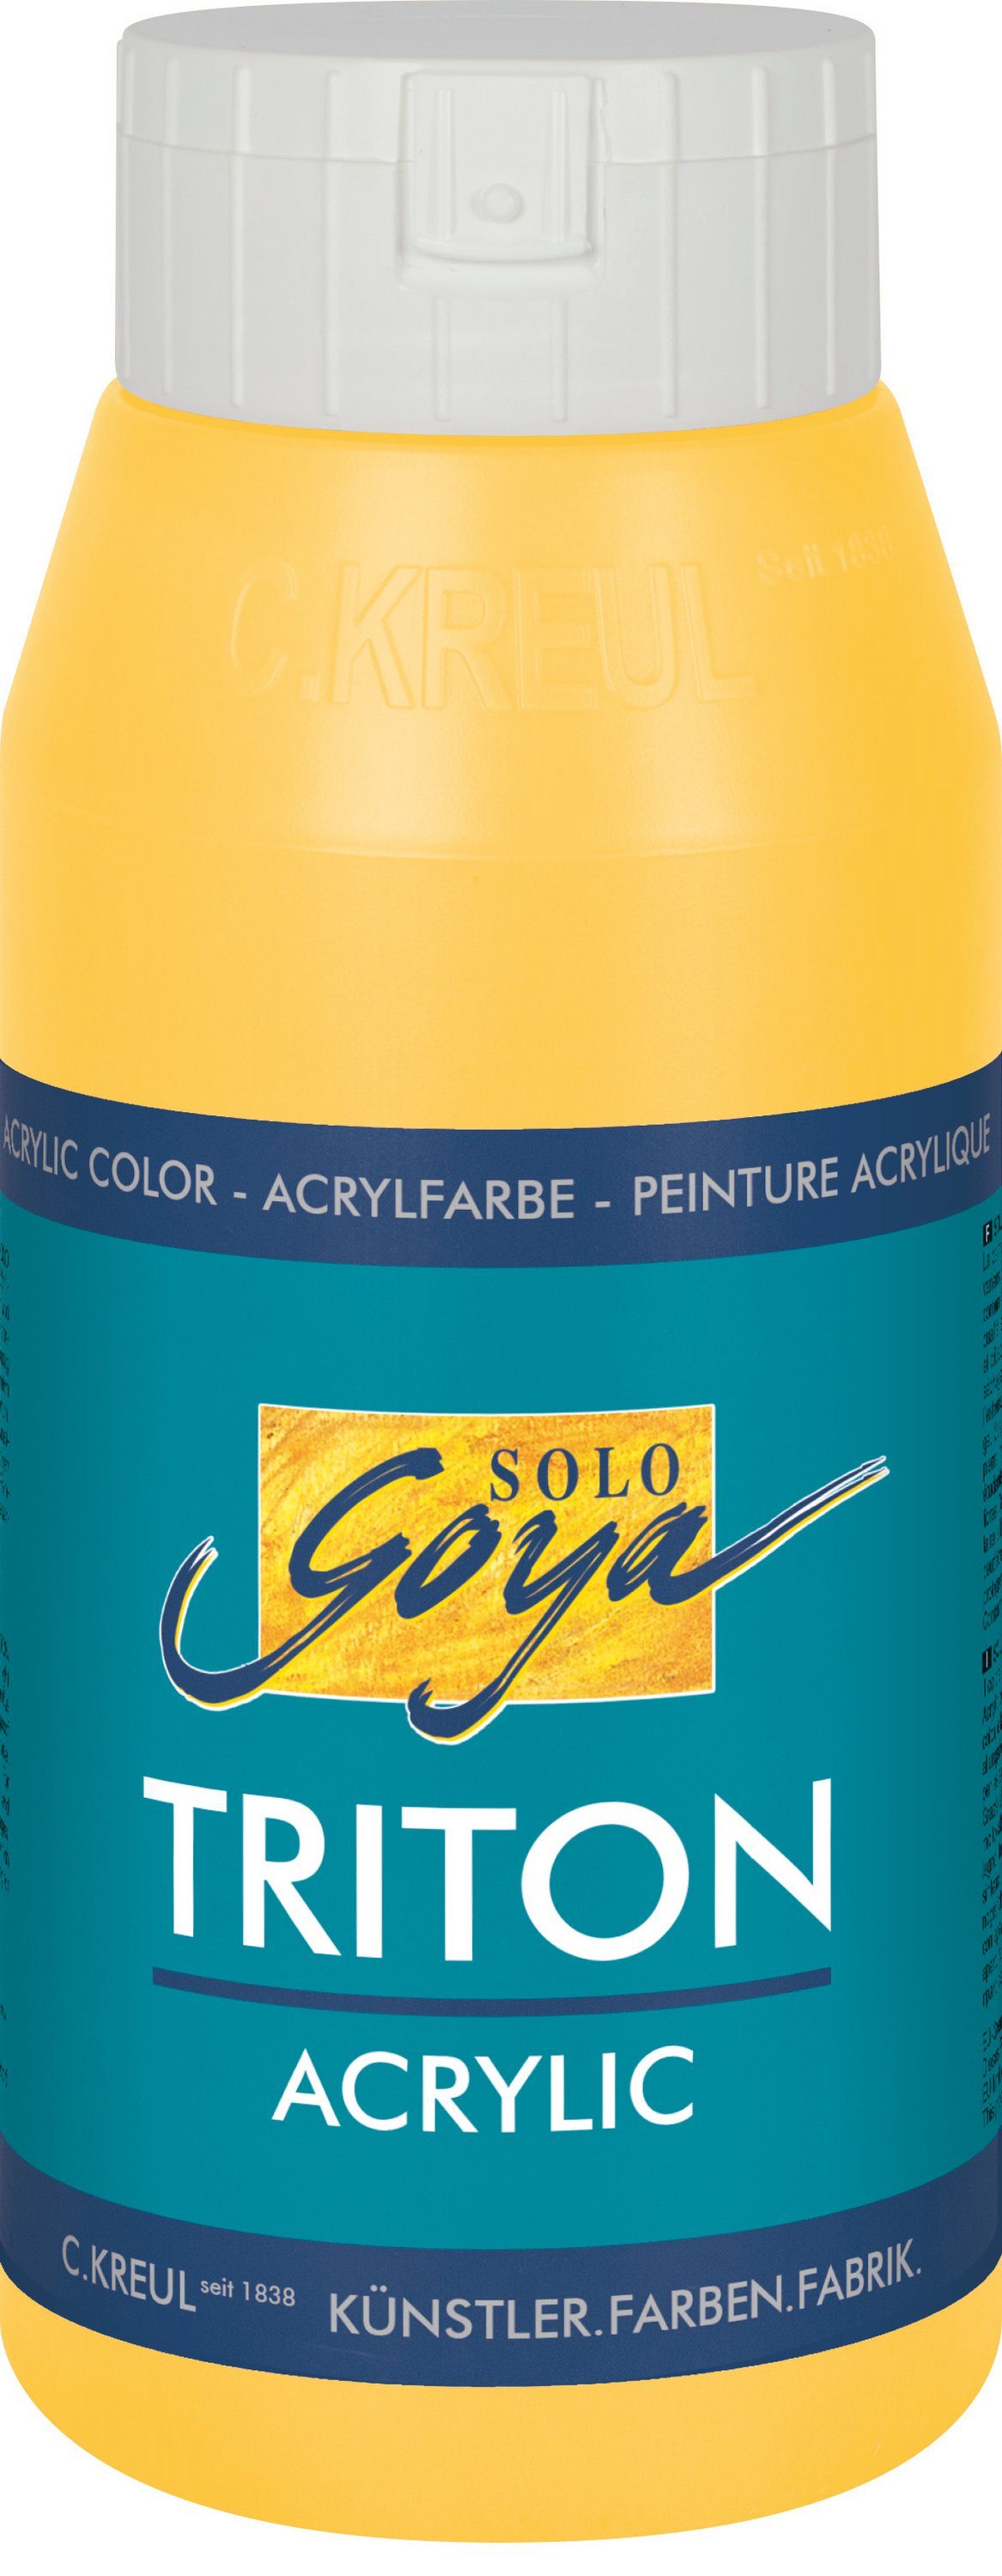 Kreul Acrylfarbe Solo Goya Triton Acrylic, 750 ml Kadmiumgelb-Hell